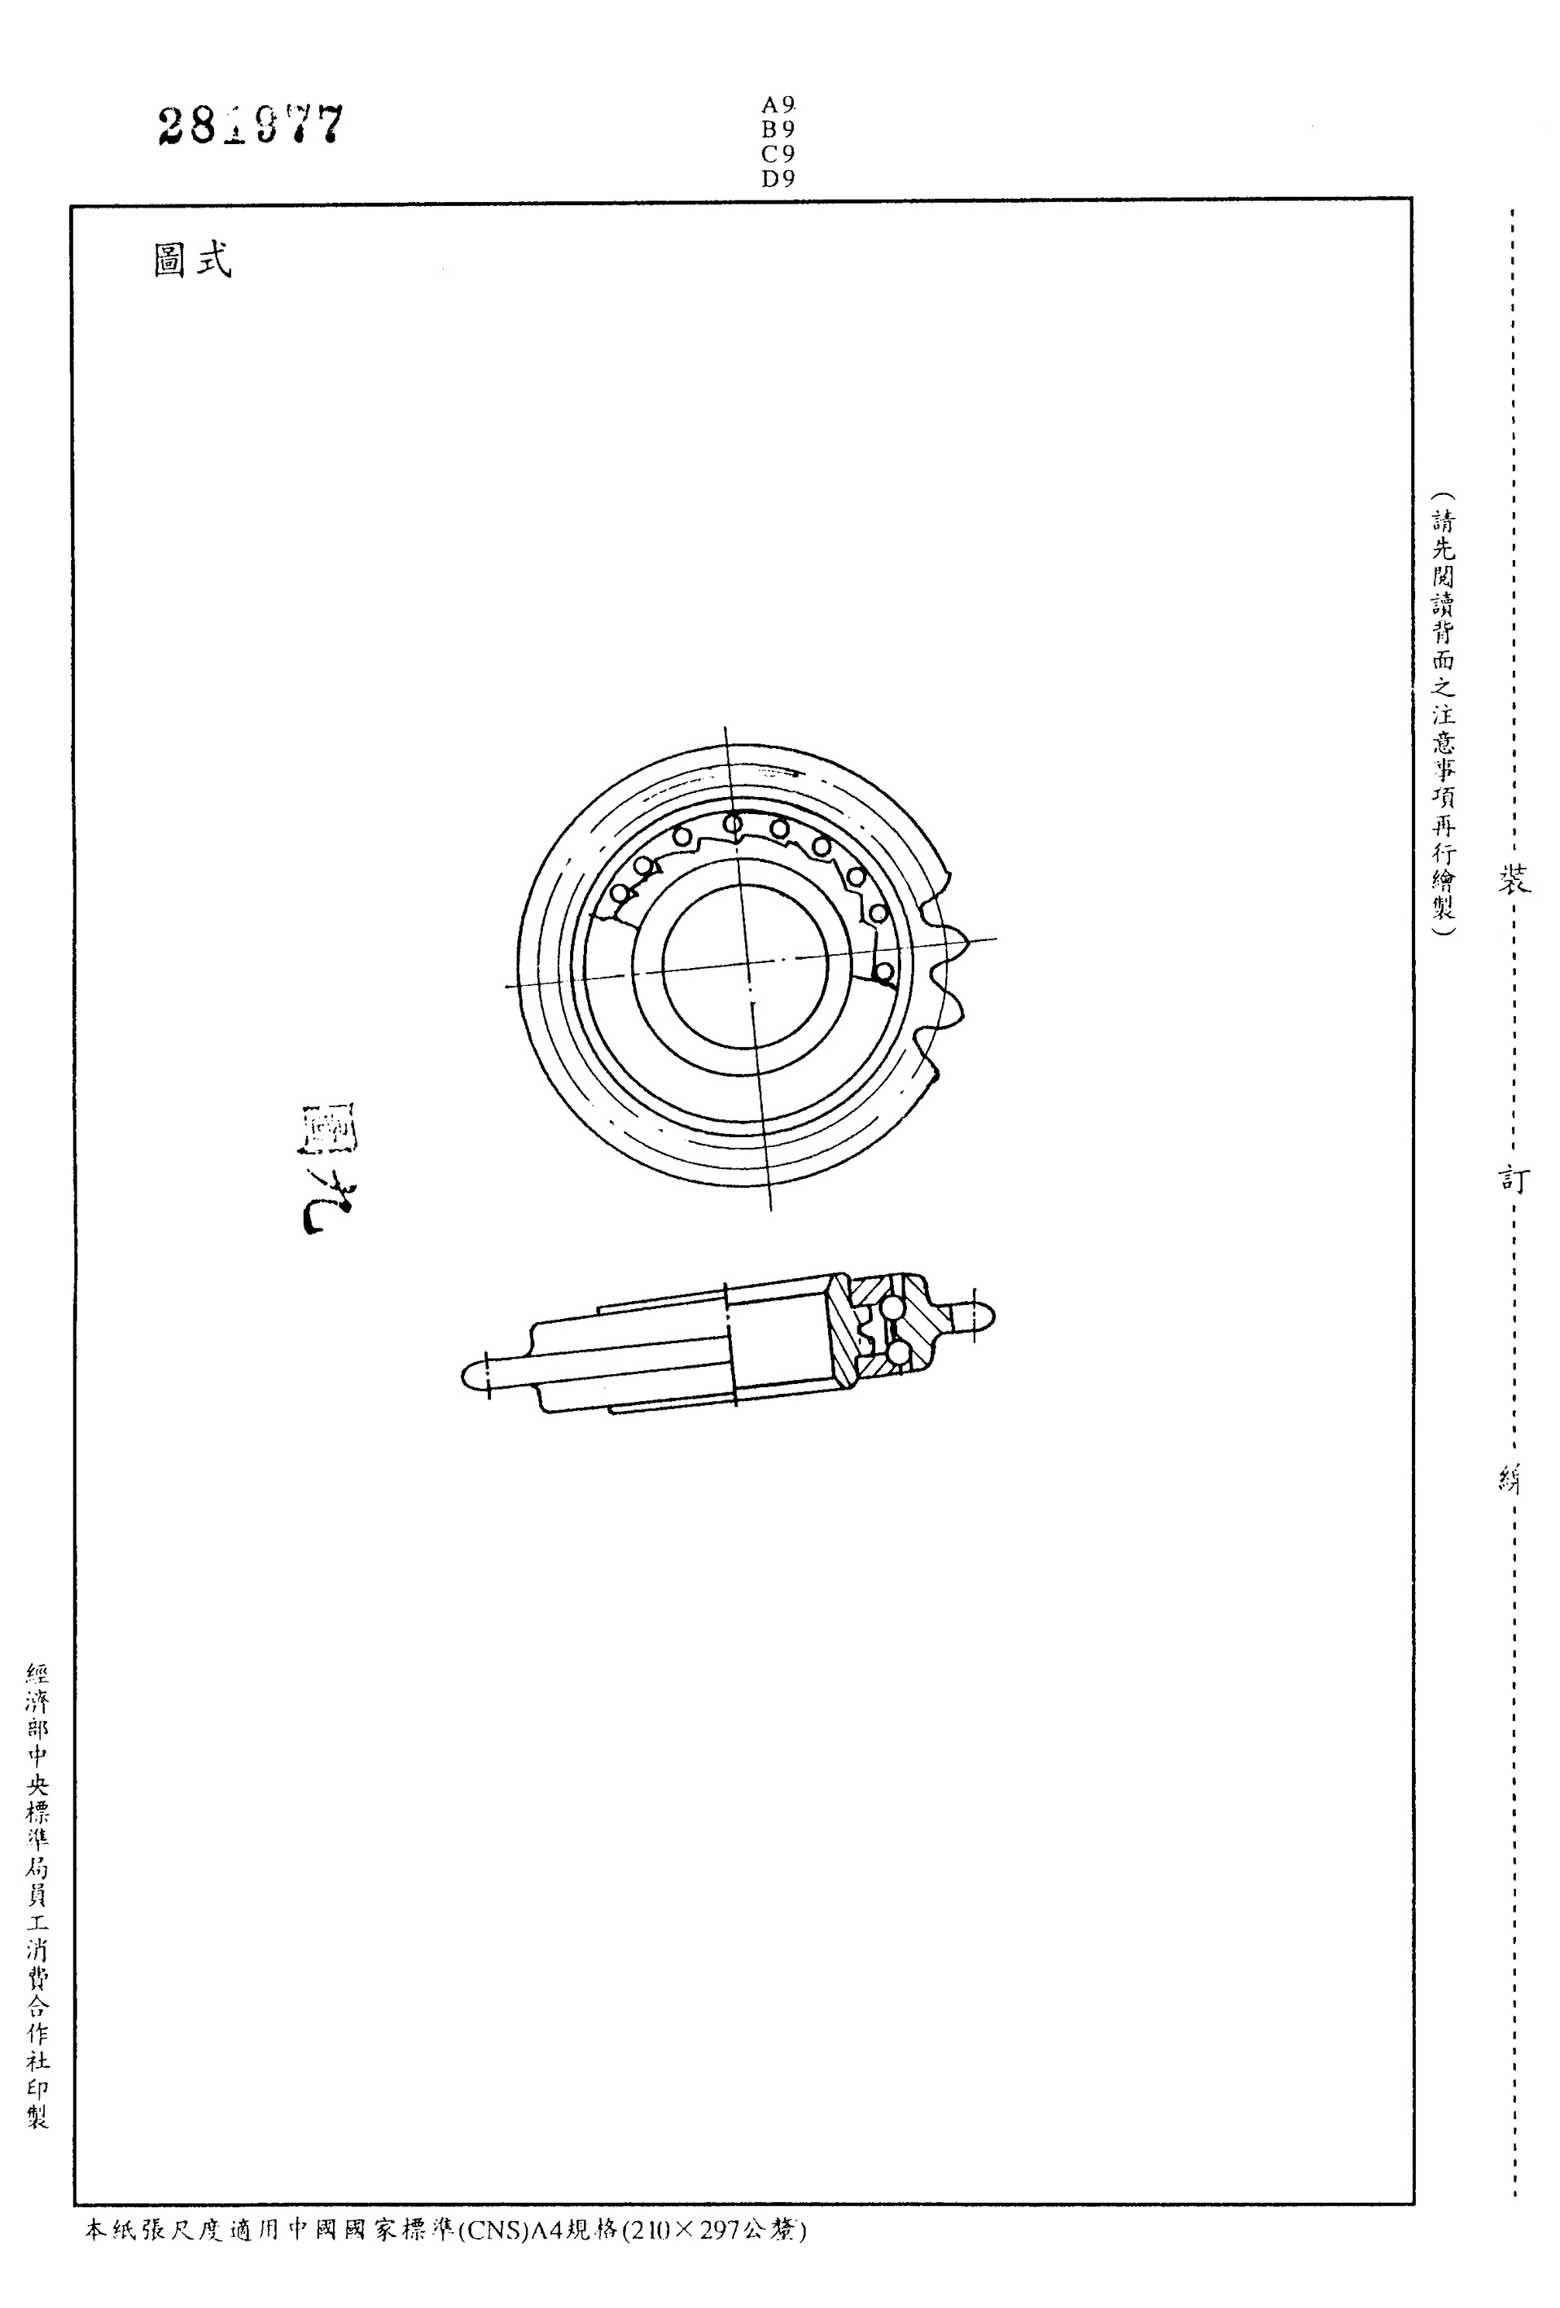 Taiwan patent 281,977 - Falcon? scan 14 main image